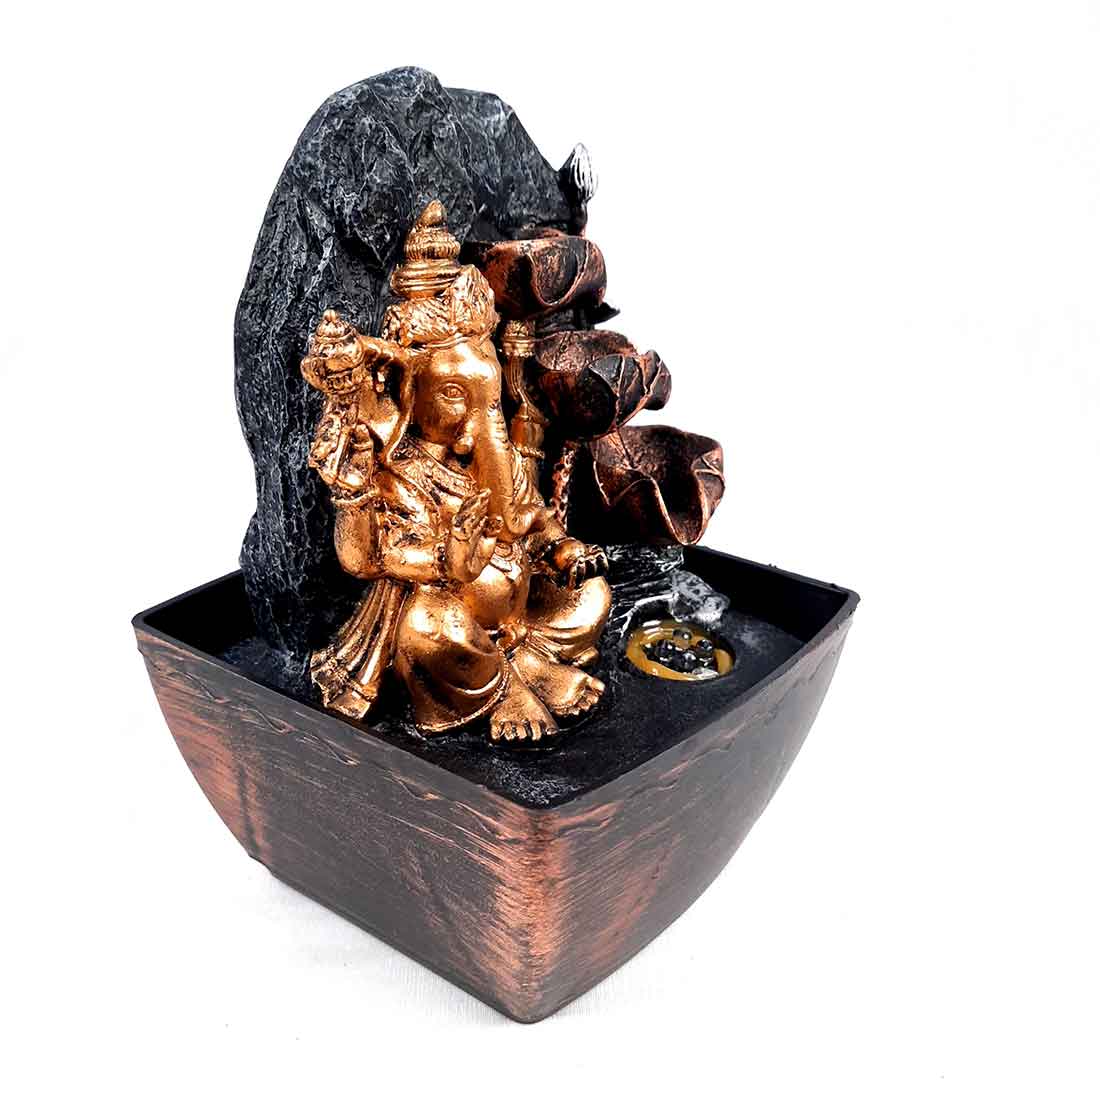 Lord Ganesha Fountain Showpiece - For Table Decor & Gifts - 8 inch - ApkaMart